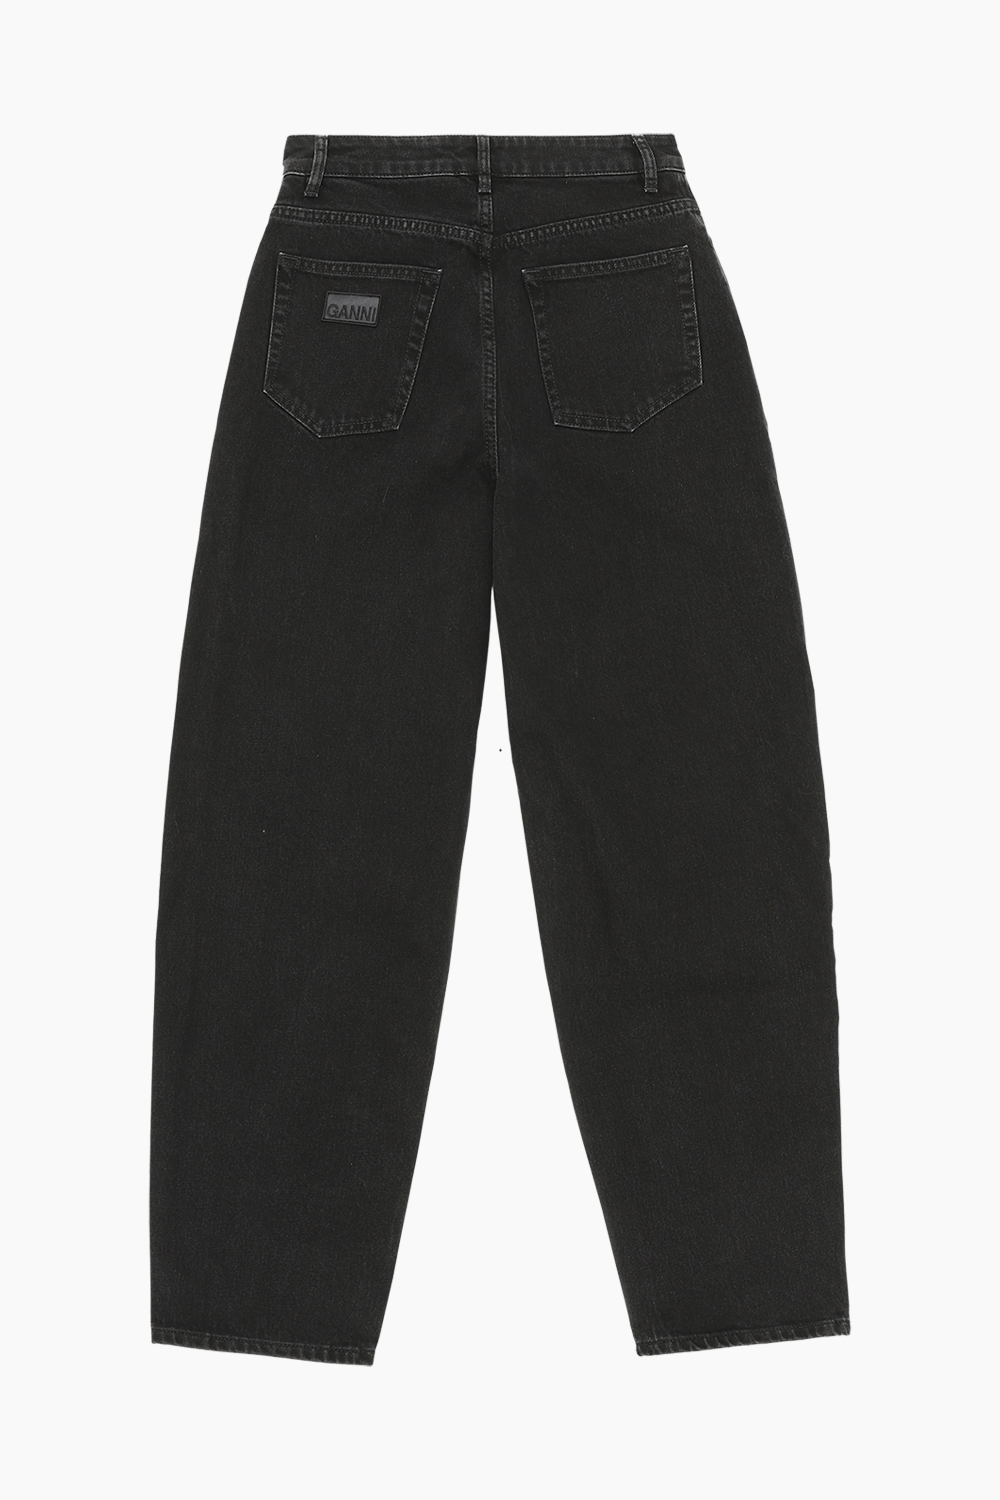 Stary Jeans - Washed Black/Black - GANNI